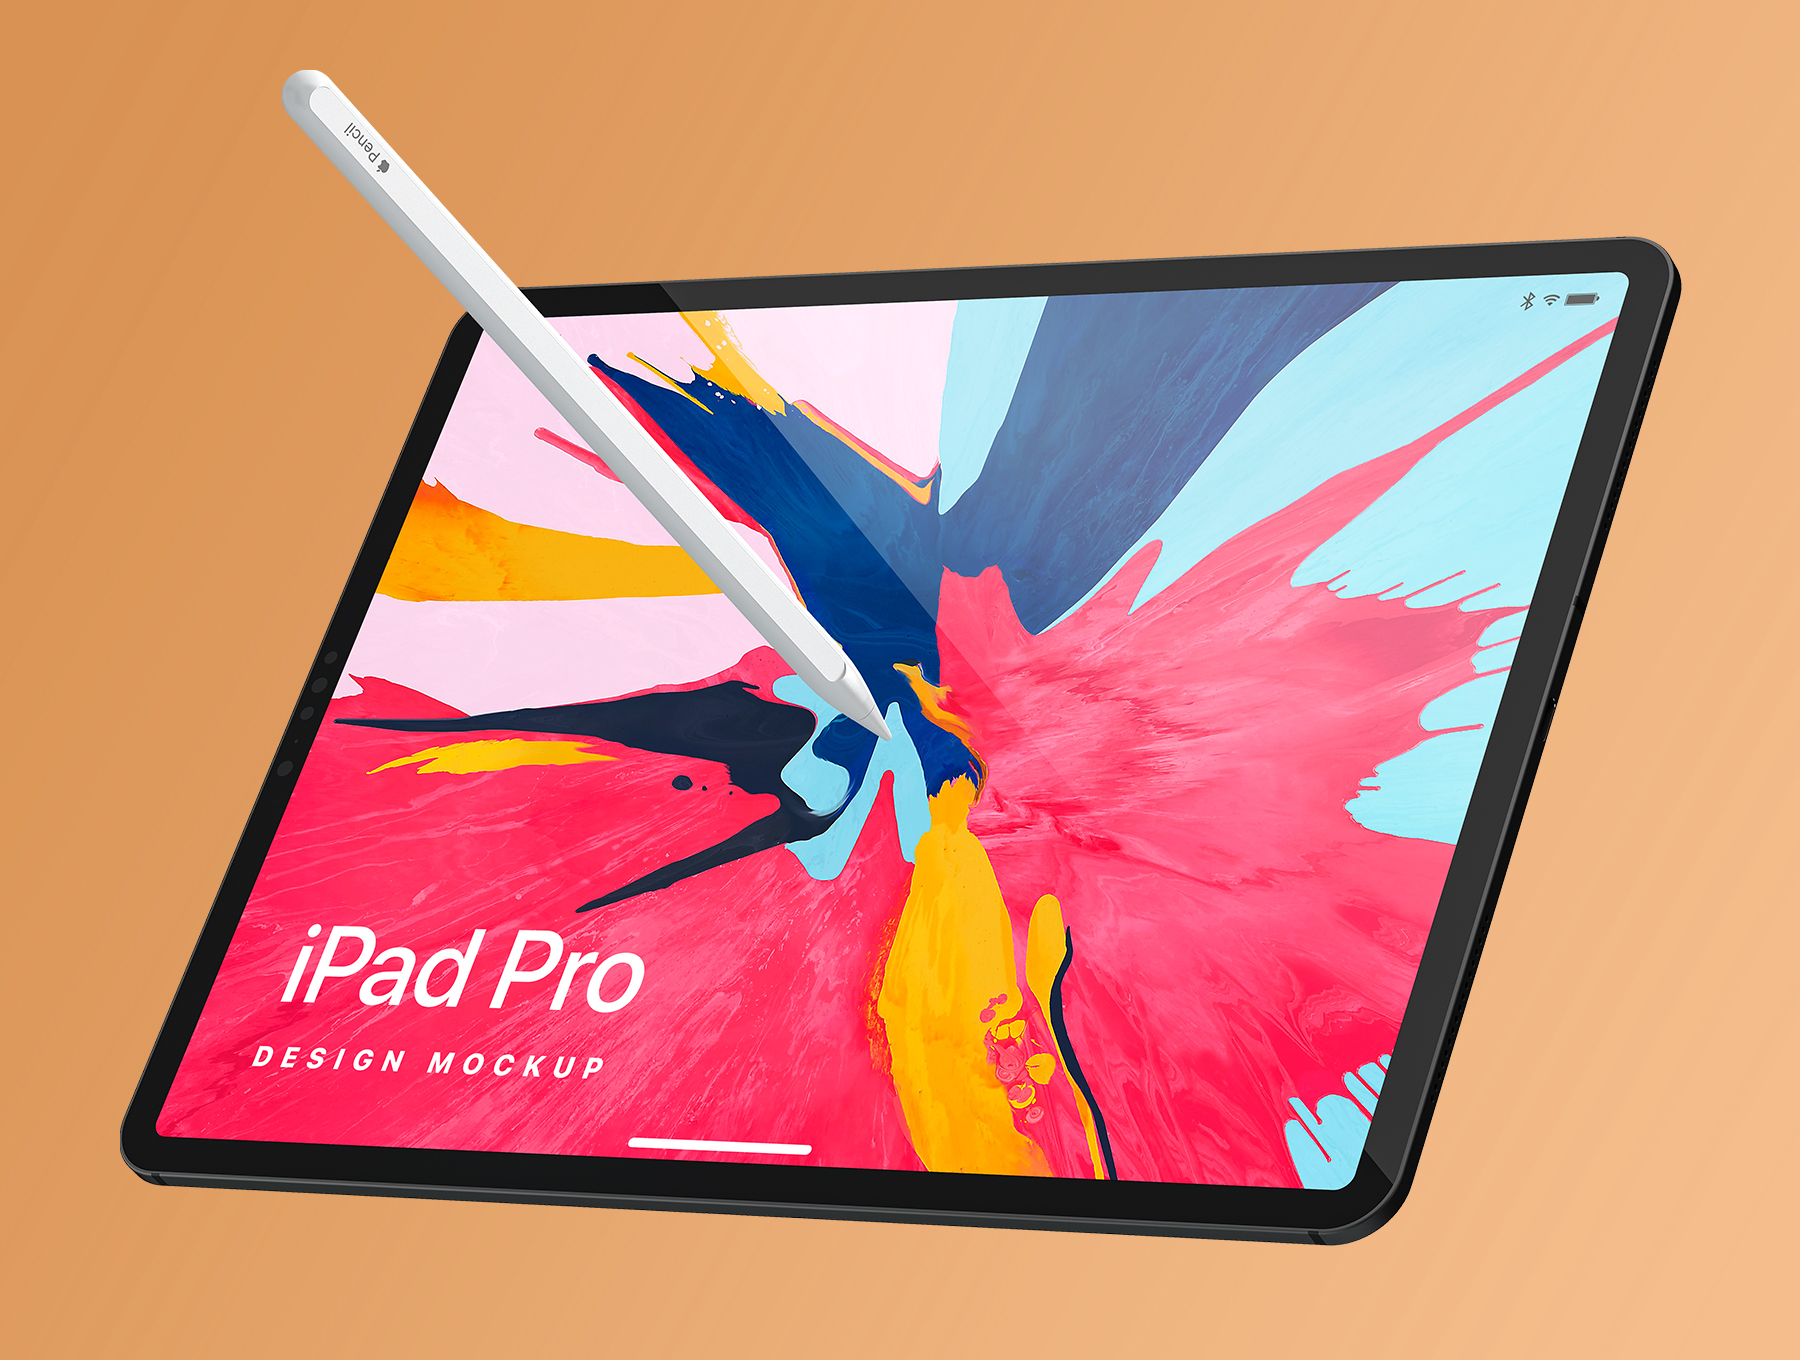 iPad Pro 绘画展示样机iPad Pro Design